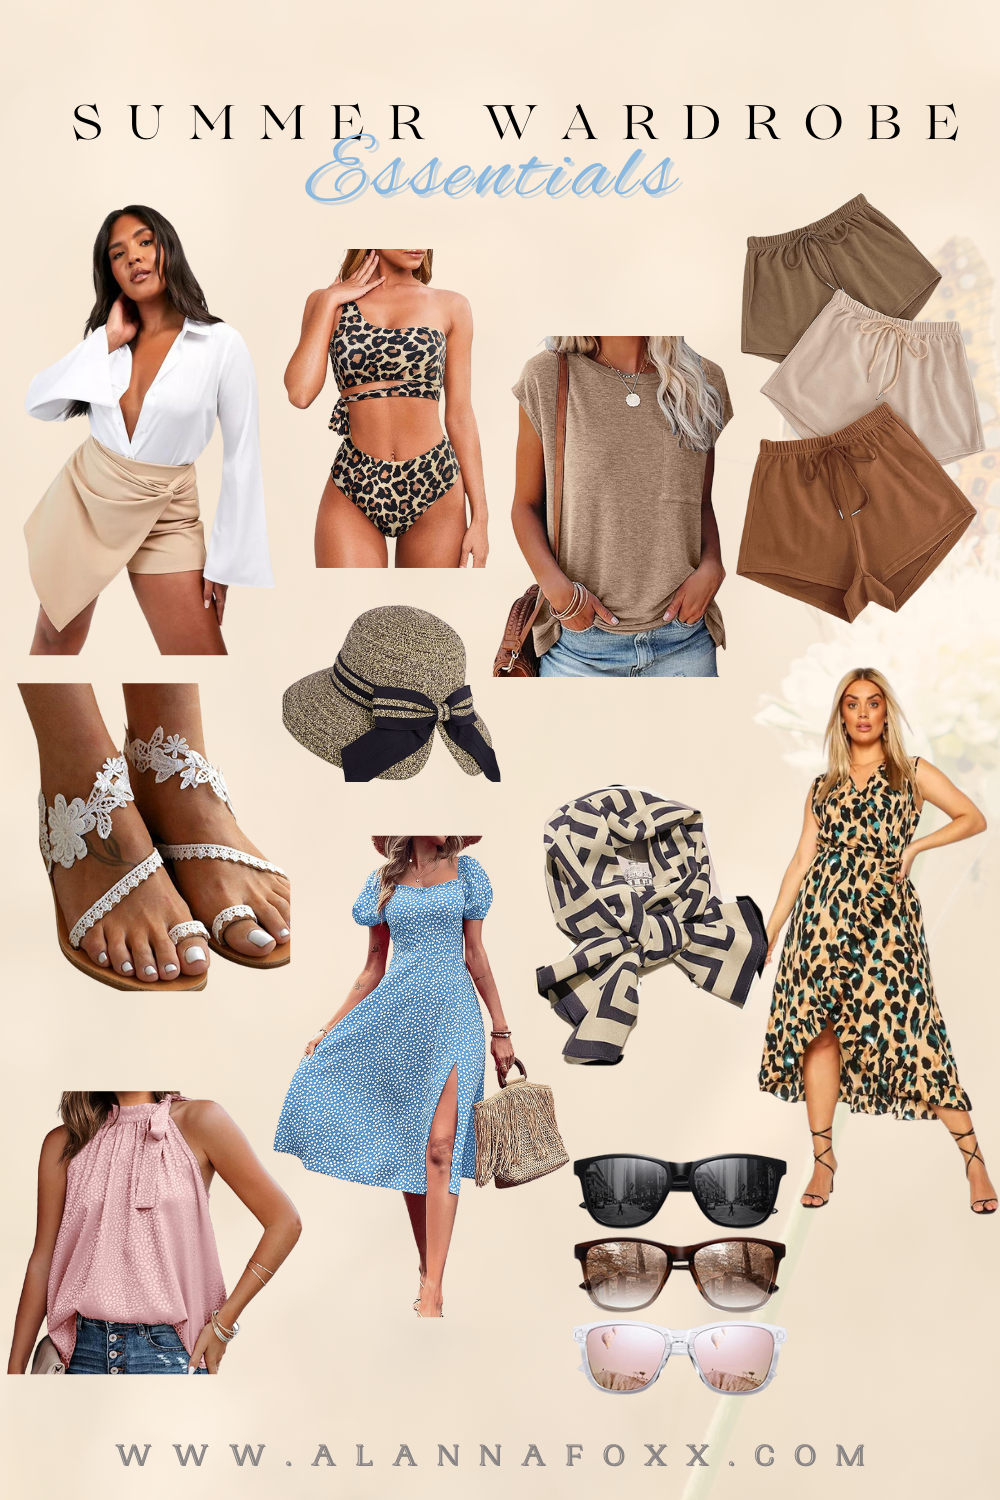 10 Summer Wardrobe Essentials Every Woman Needs In Her Closet